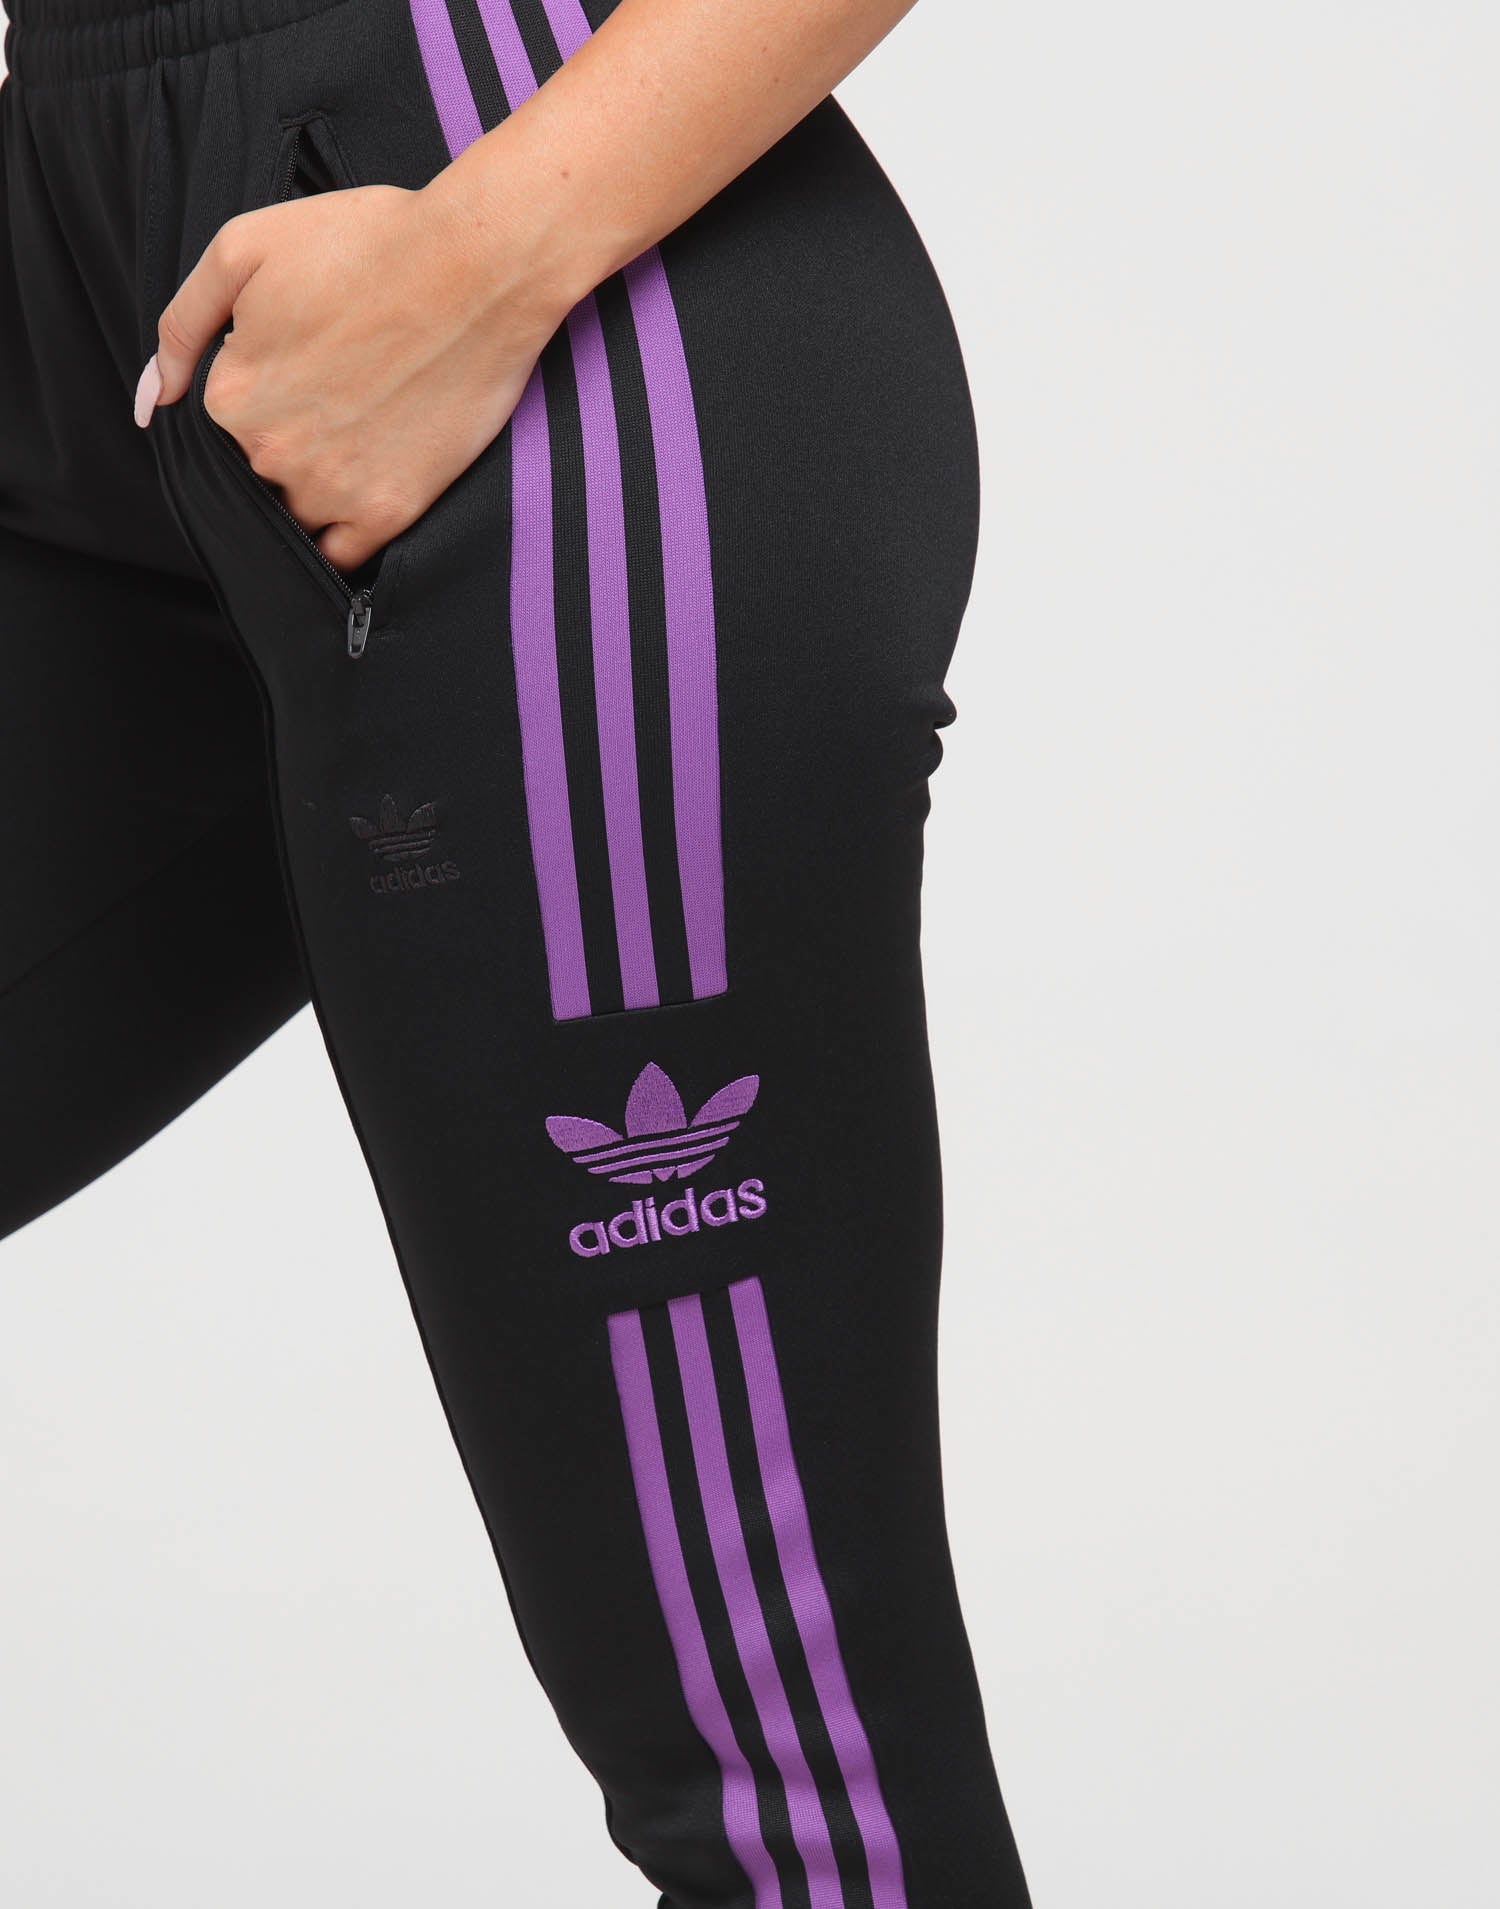 black adidas pants with purple stripes